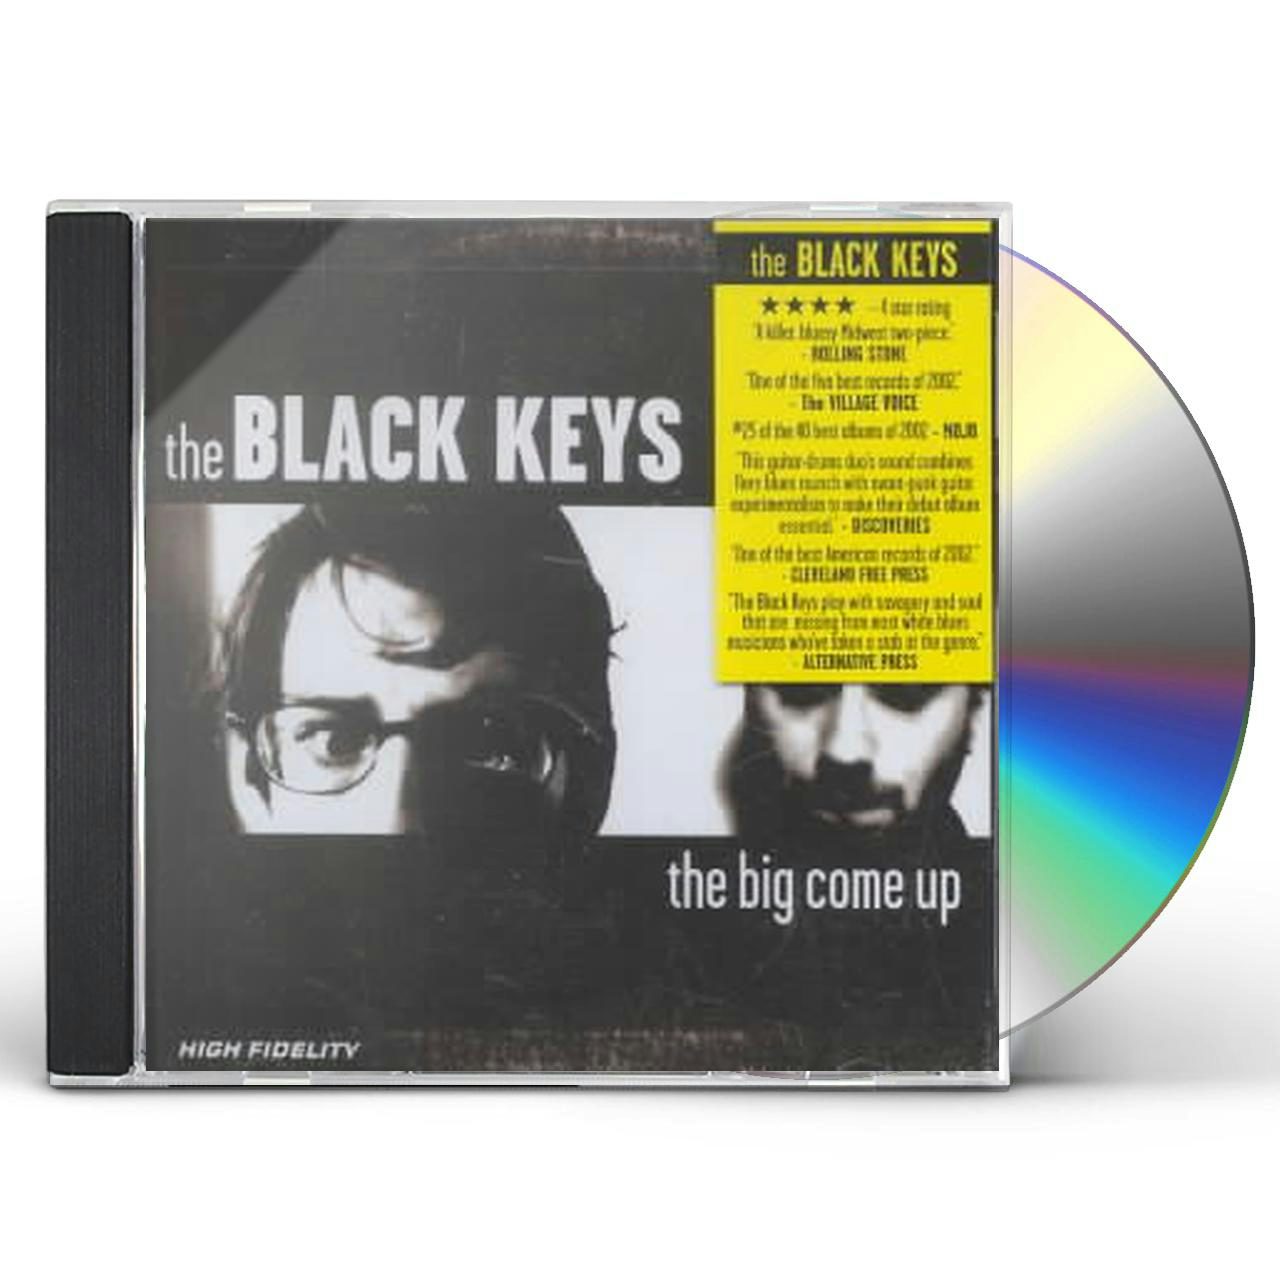 The Black Keys - Official Website & Store